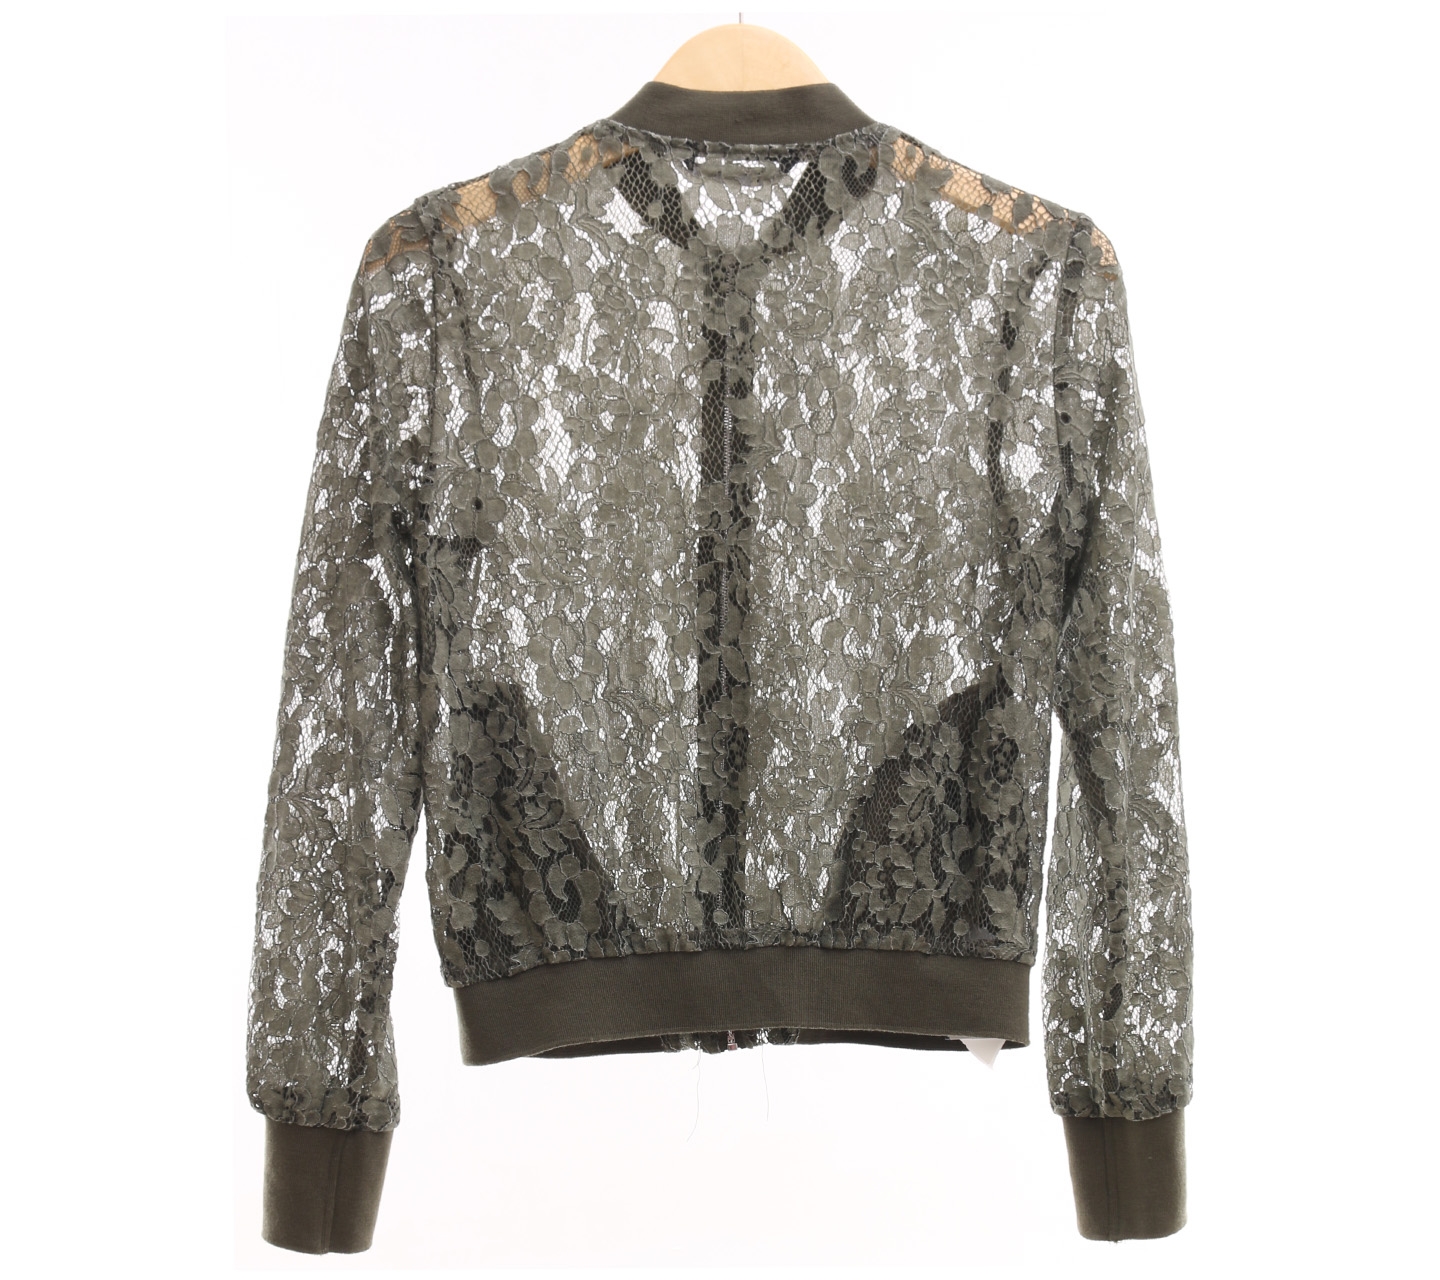 Zara Olive Lace Jacket